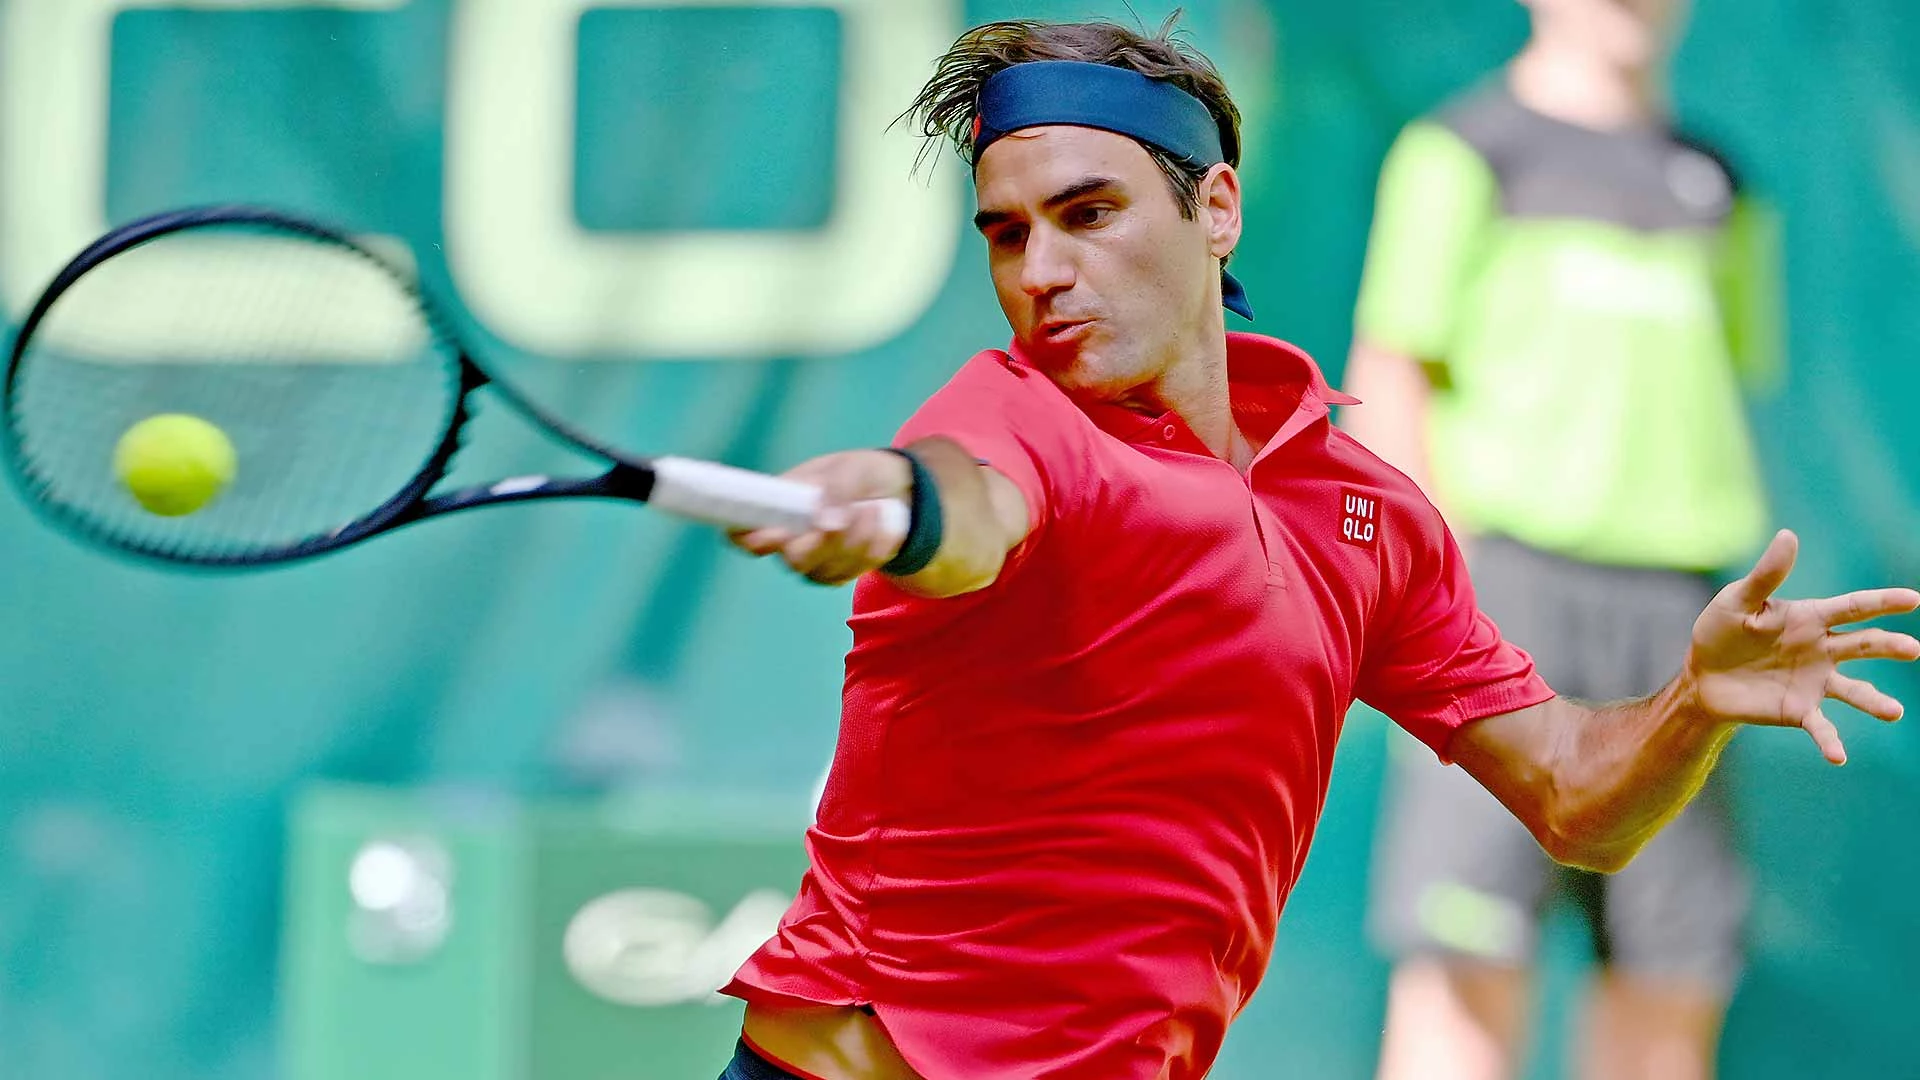 Роджер Федерер - Адриан Маннарино. Прогноз на матч ATP Уимблдон (29 июня 2021 года)